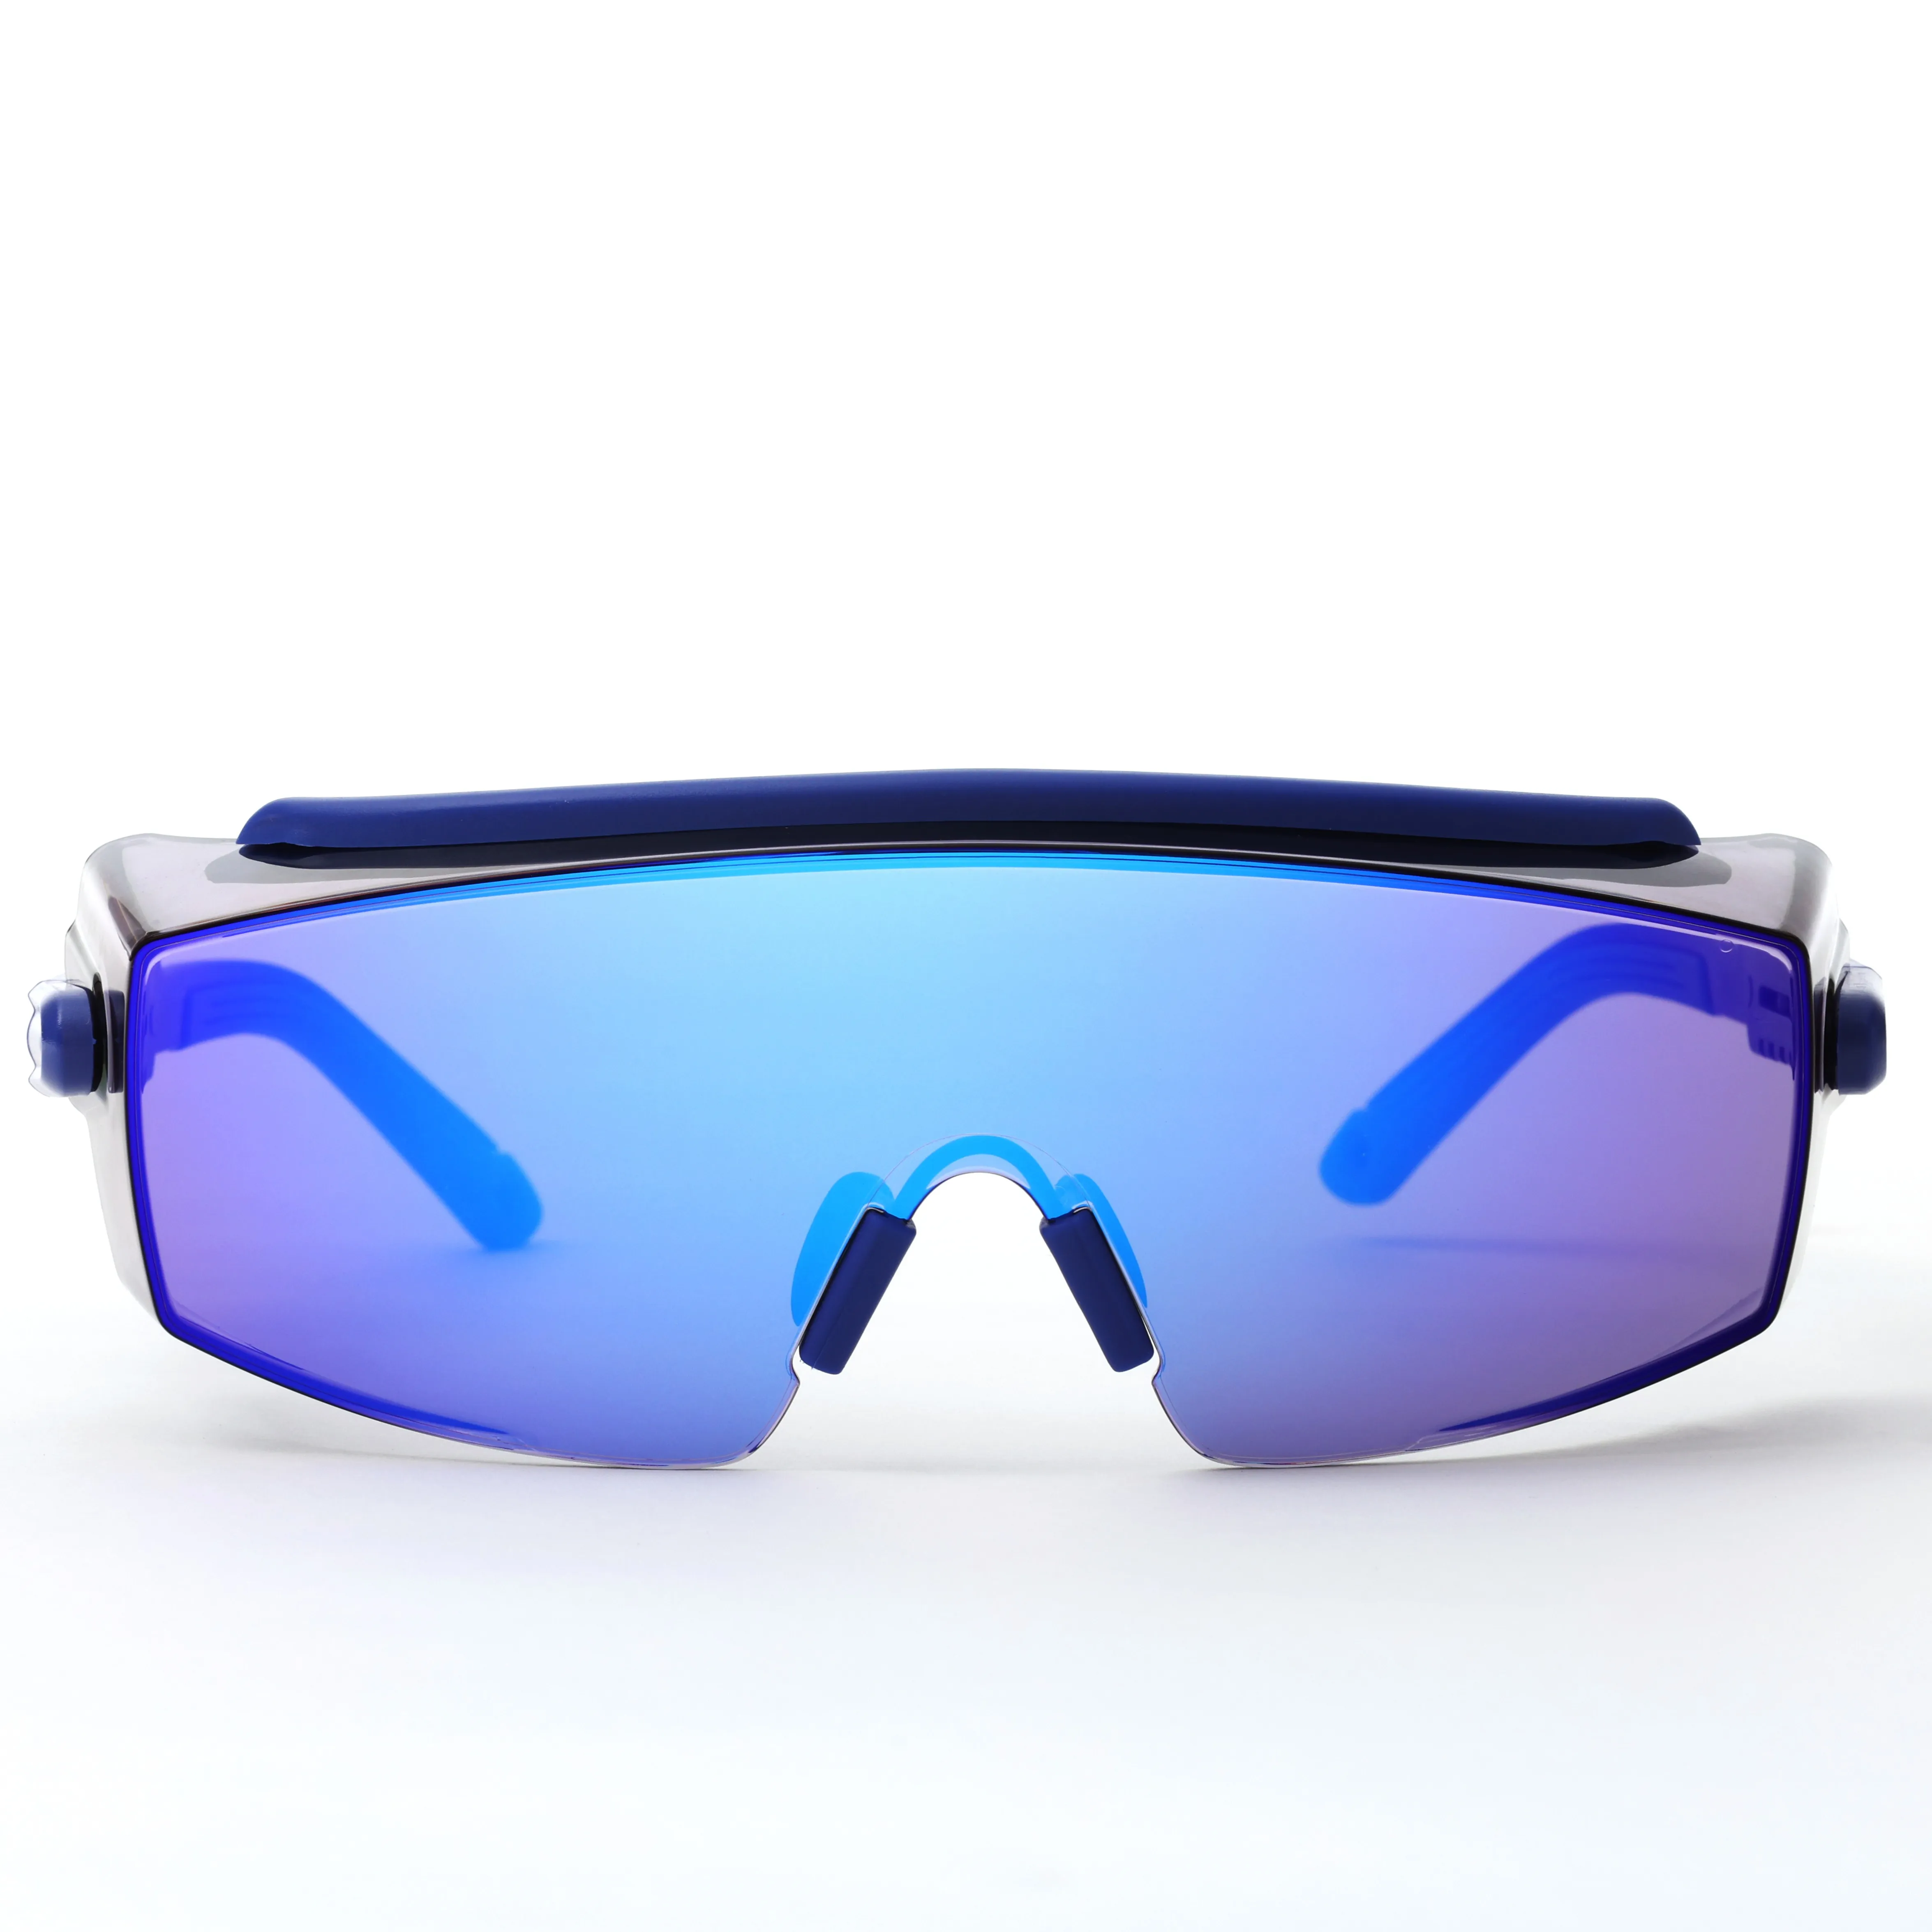 Glasses Safety Glasses Eye Protection Chemical Splash Impact Eye Anti Fog Protective Safety Glasses